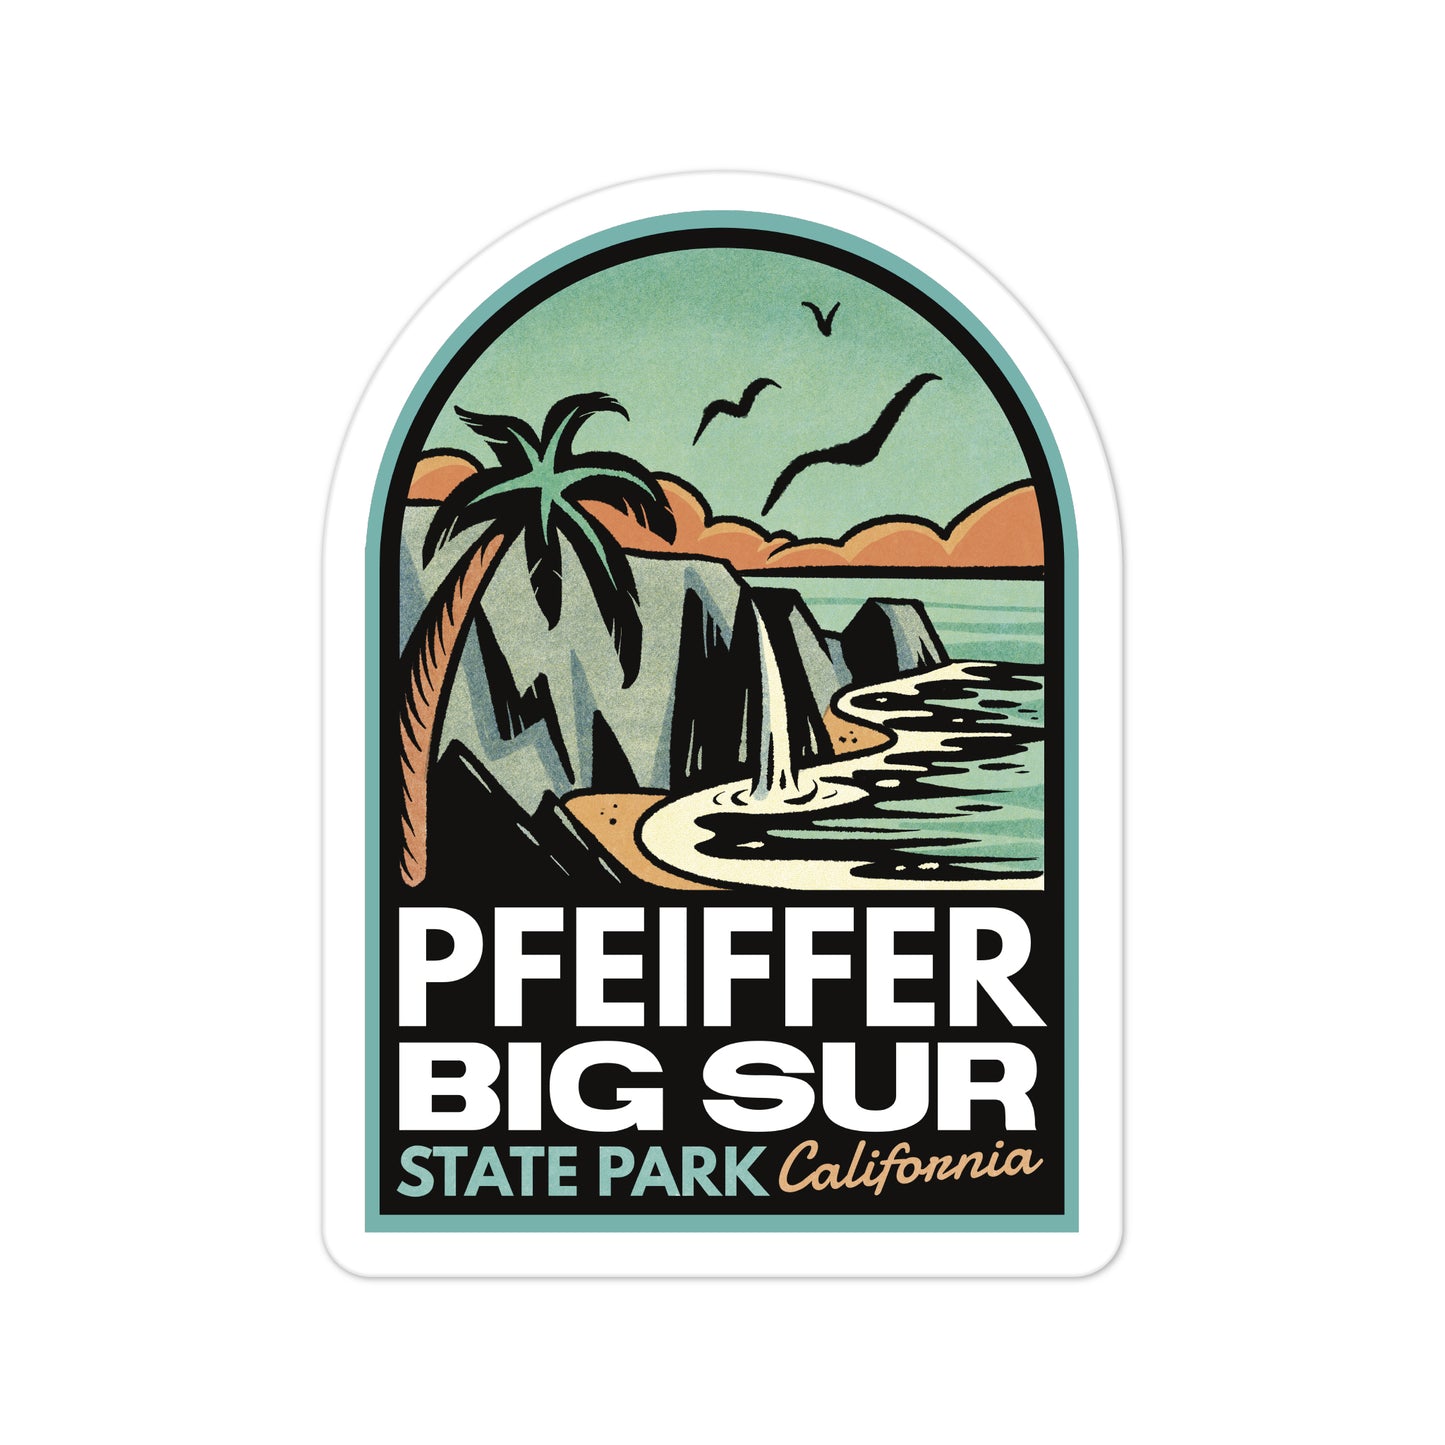 A sticker of Pfeiffer Big Sur State Park